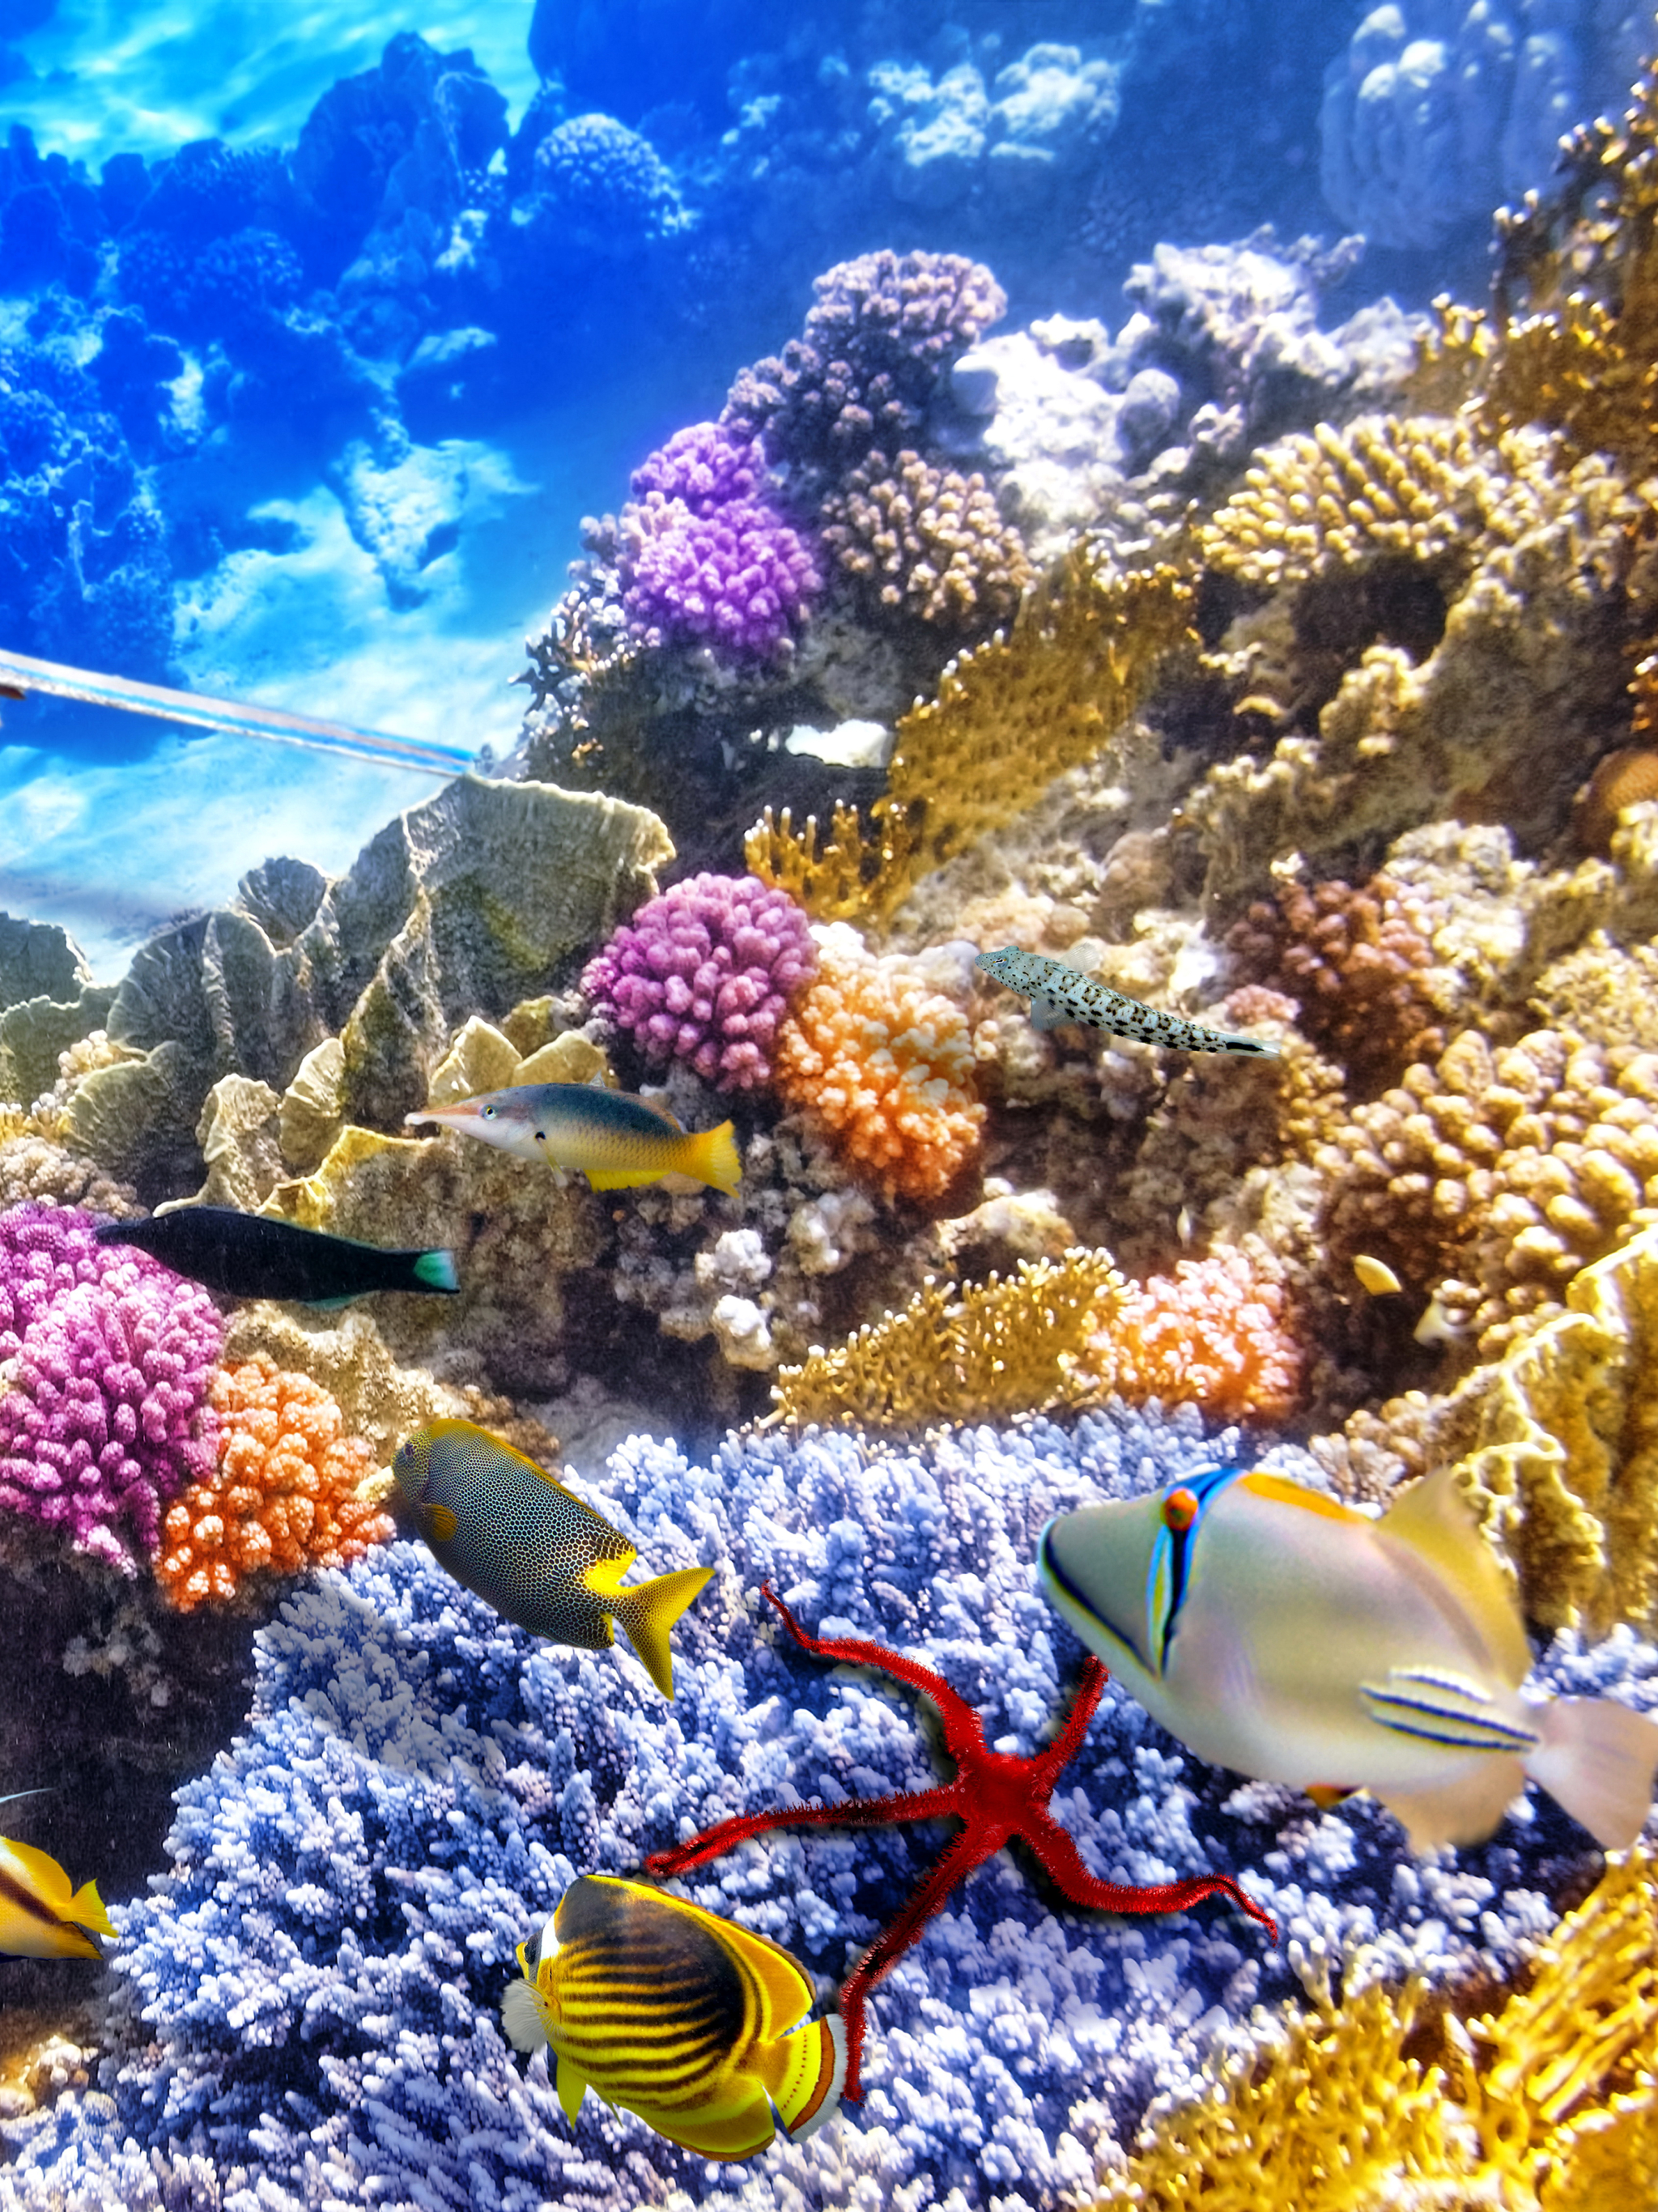 1180411 descargar imagen animales, pez, mantarraya, coral, submarino, submarina, peces: fondos de pantalla y protectores de pantalla gratis